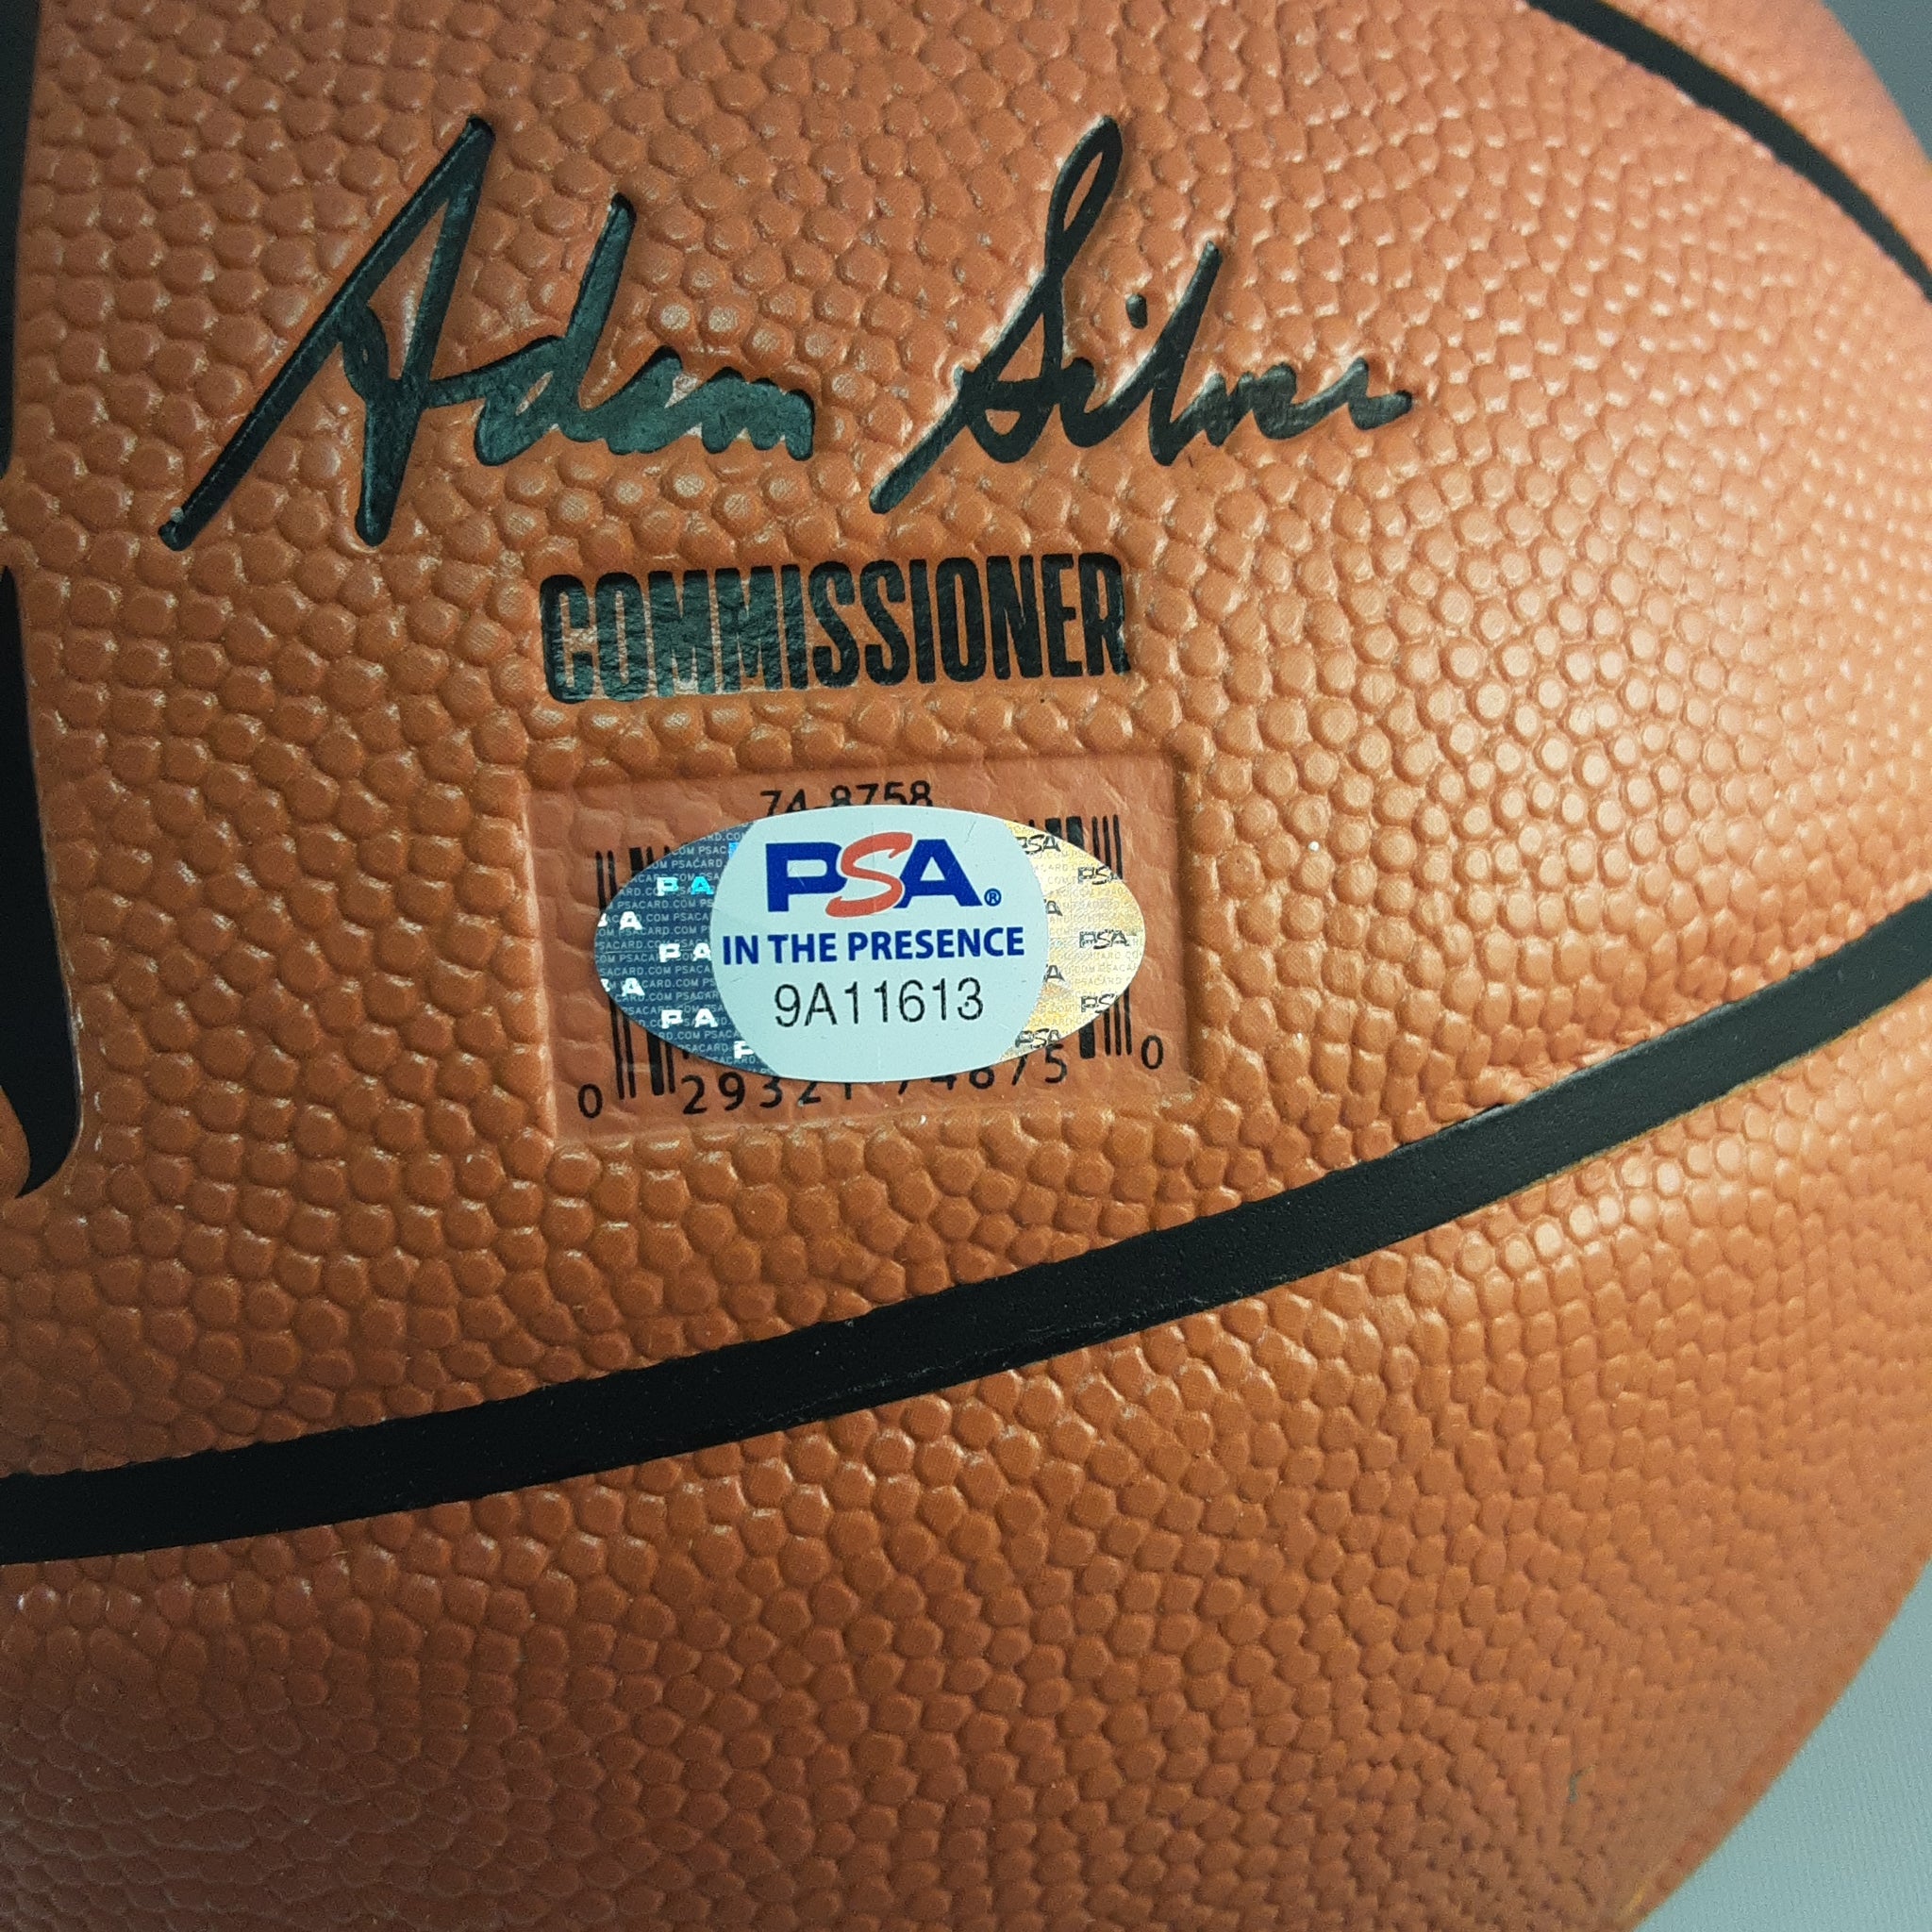 Jason Williams Authentic Signed Basketball Autographed PSA